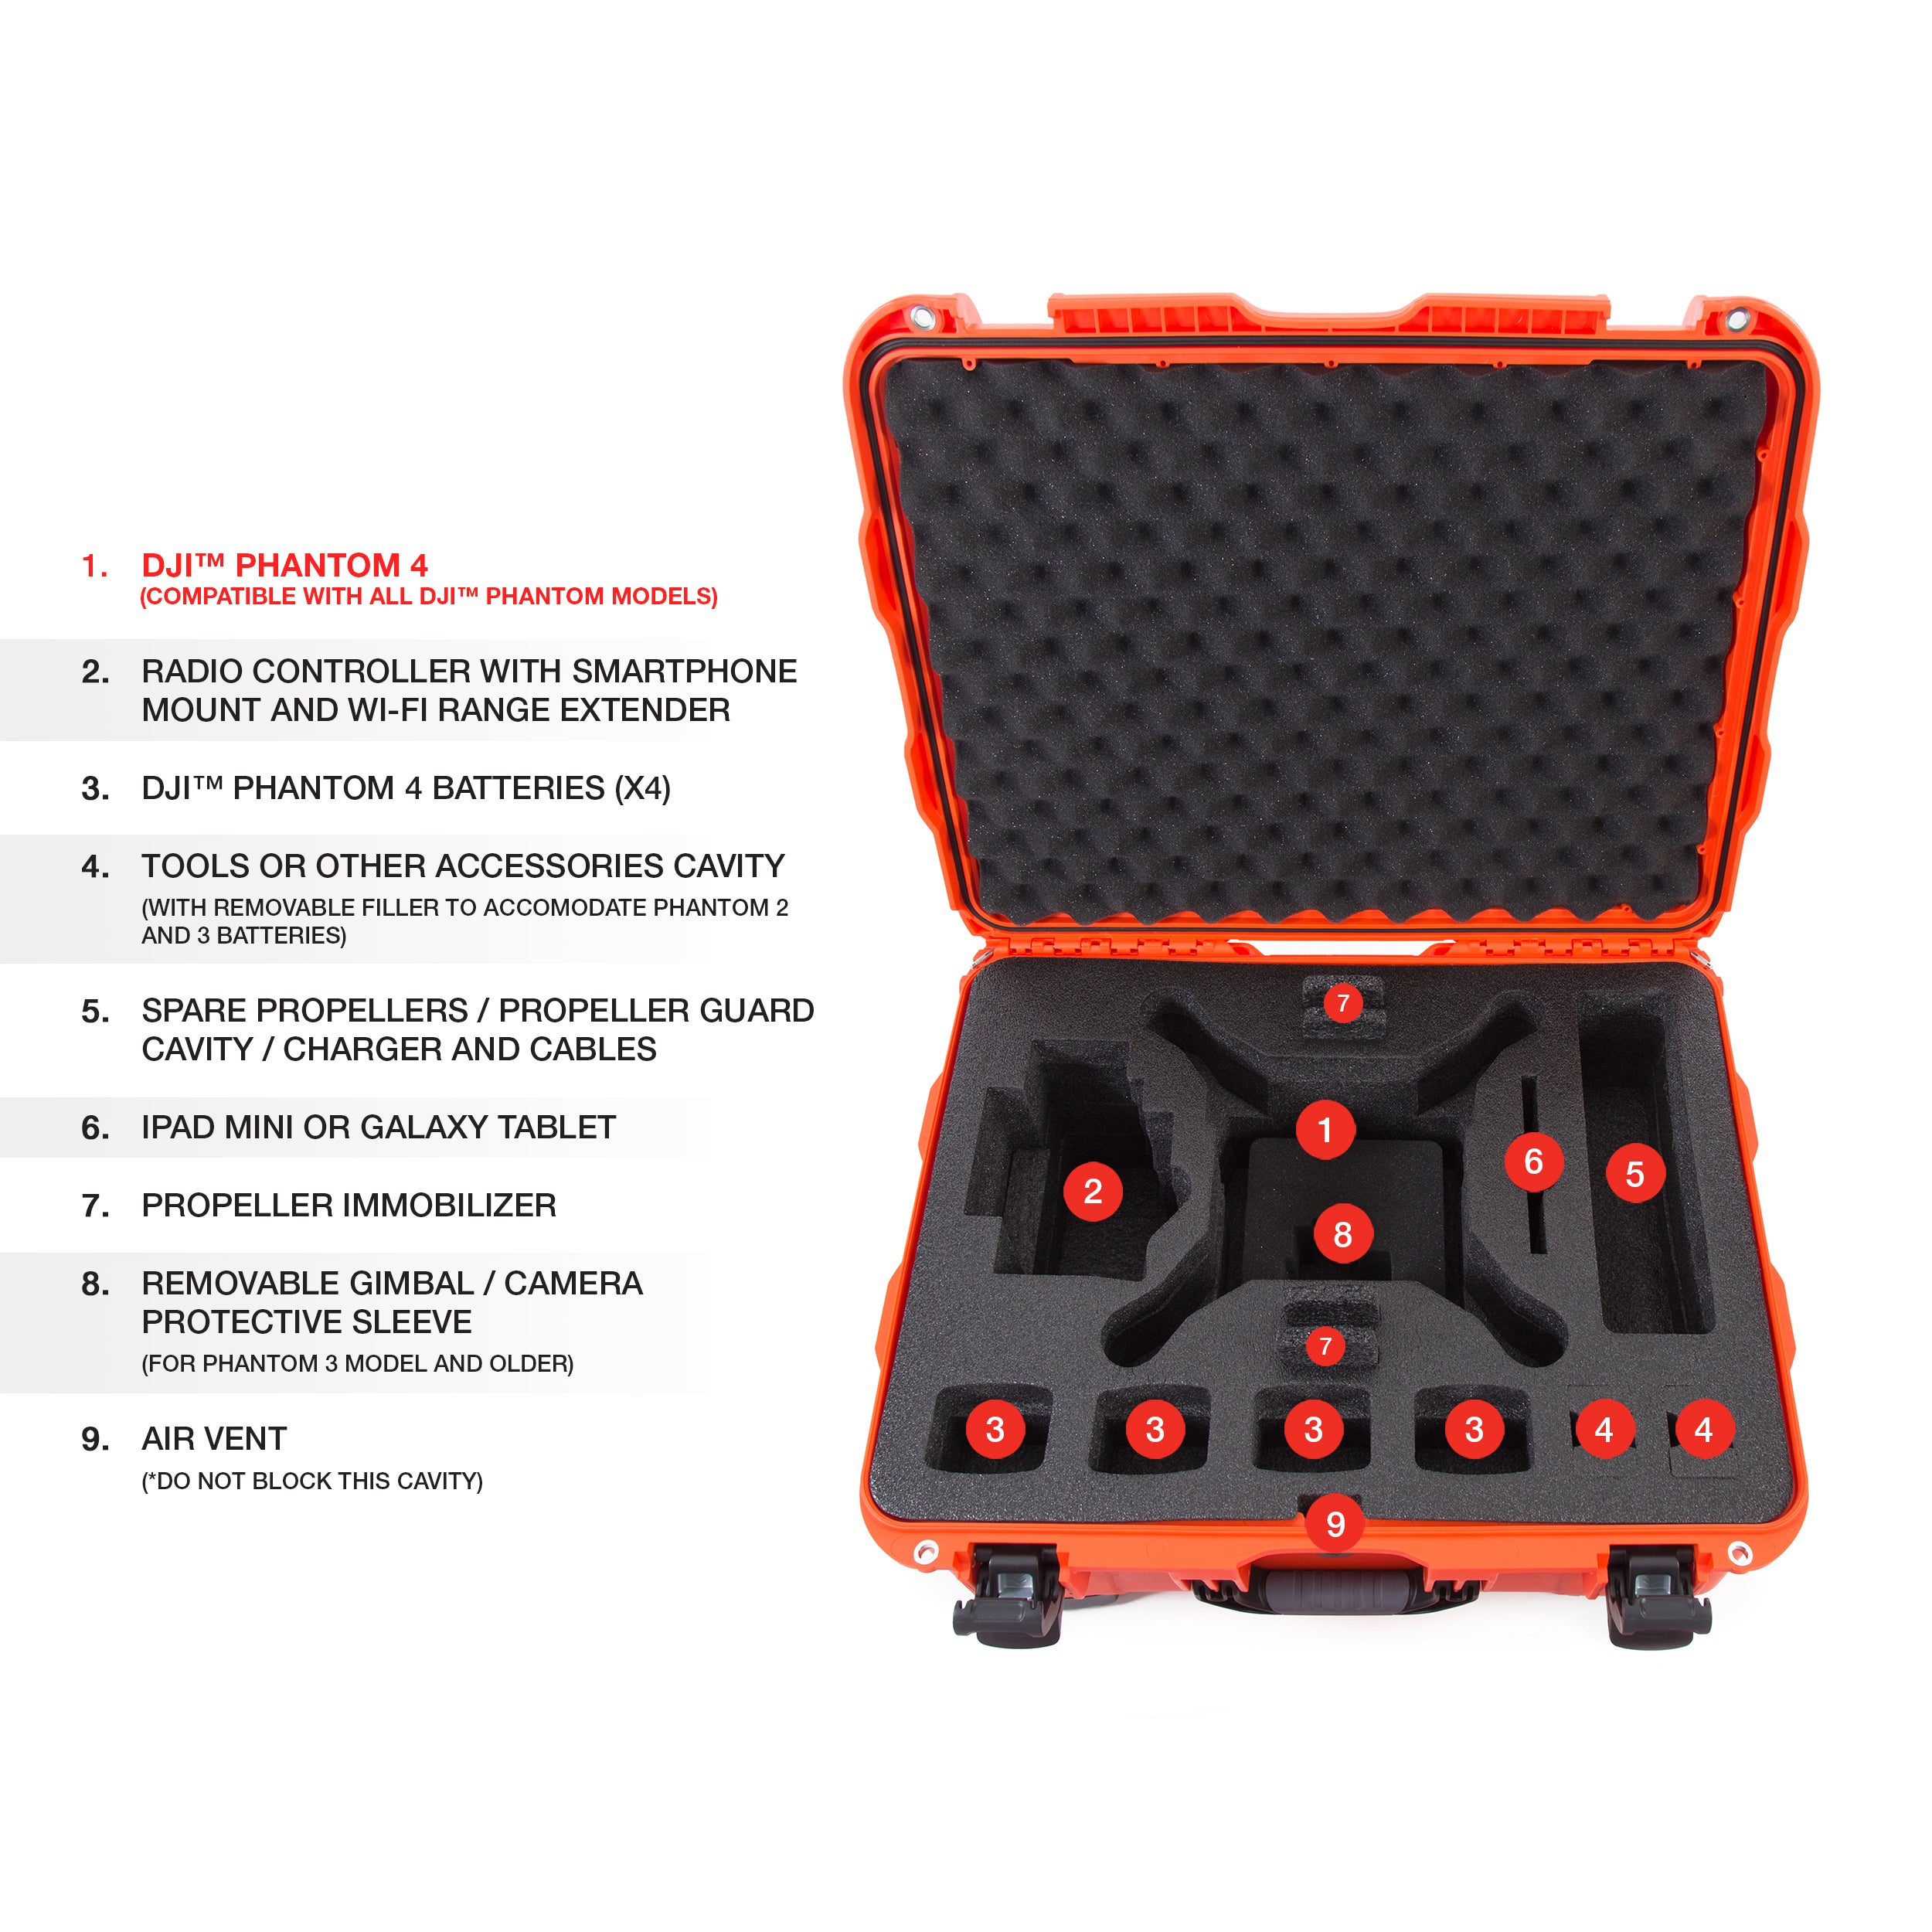 Nanuk 950 Waterproof Hard Drone Case with Wheels and Custom Foam Insert for DJI Phantom 4/ Phantom 4 Pro (Pro+) / Advanced (Advanced+) & Phantom 3 - Orange